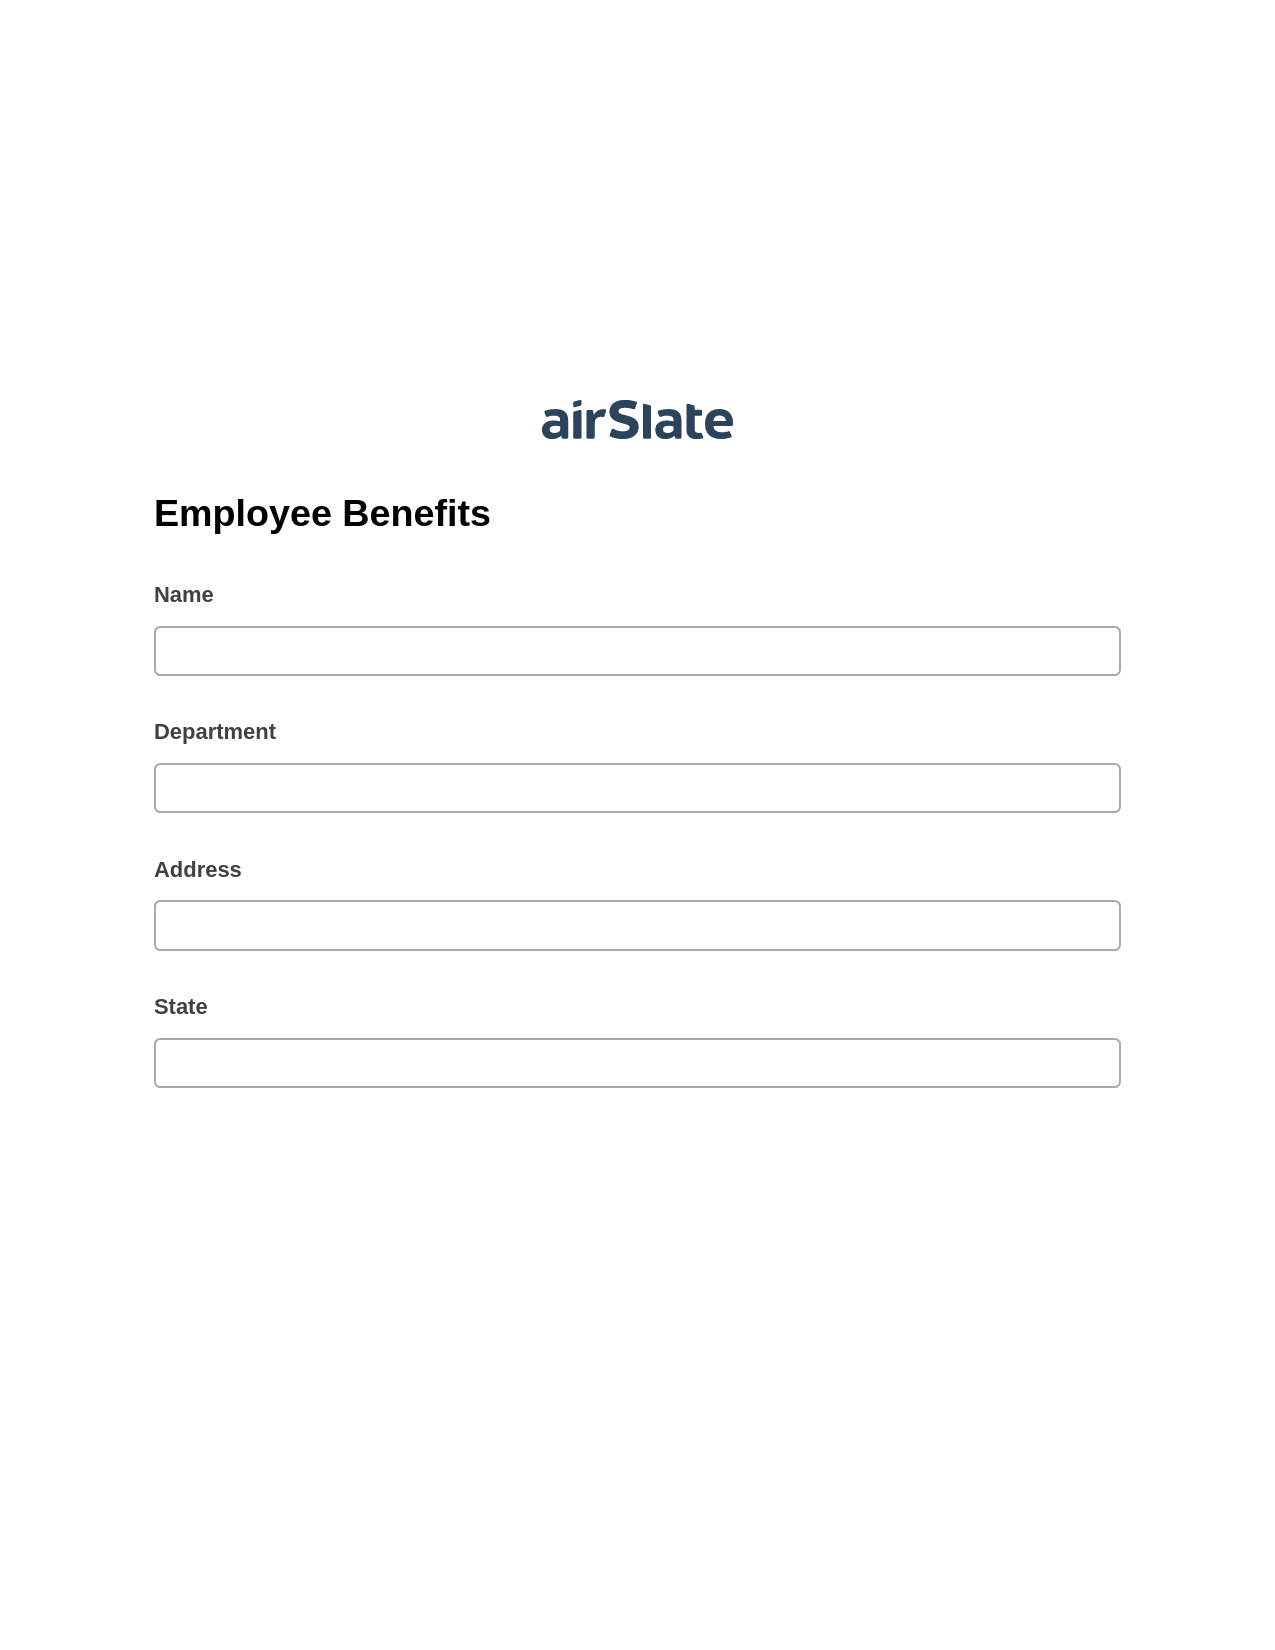 Employee Benefits Pre-fill Slate from MS Dynamics 365 Records Bot, Google Calendar Bot, Webhook Postfinish Bot